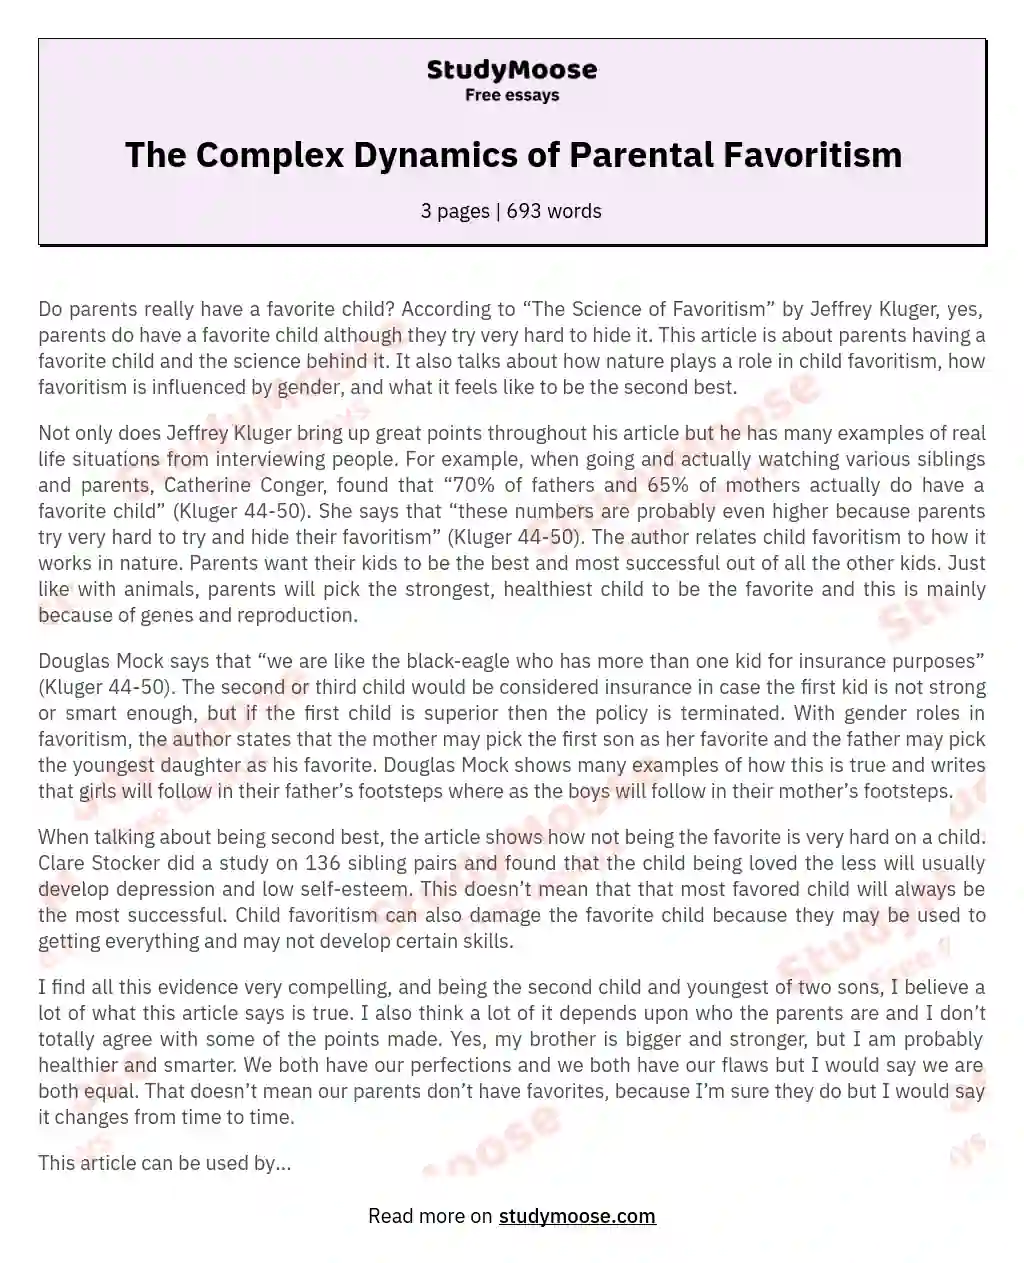 The Complex Dynamics of Parental Favoritism essay